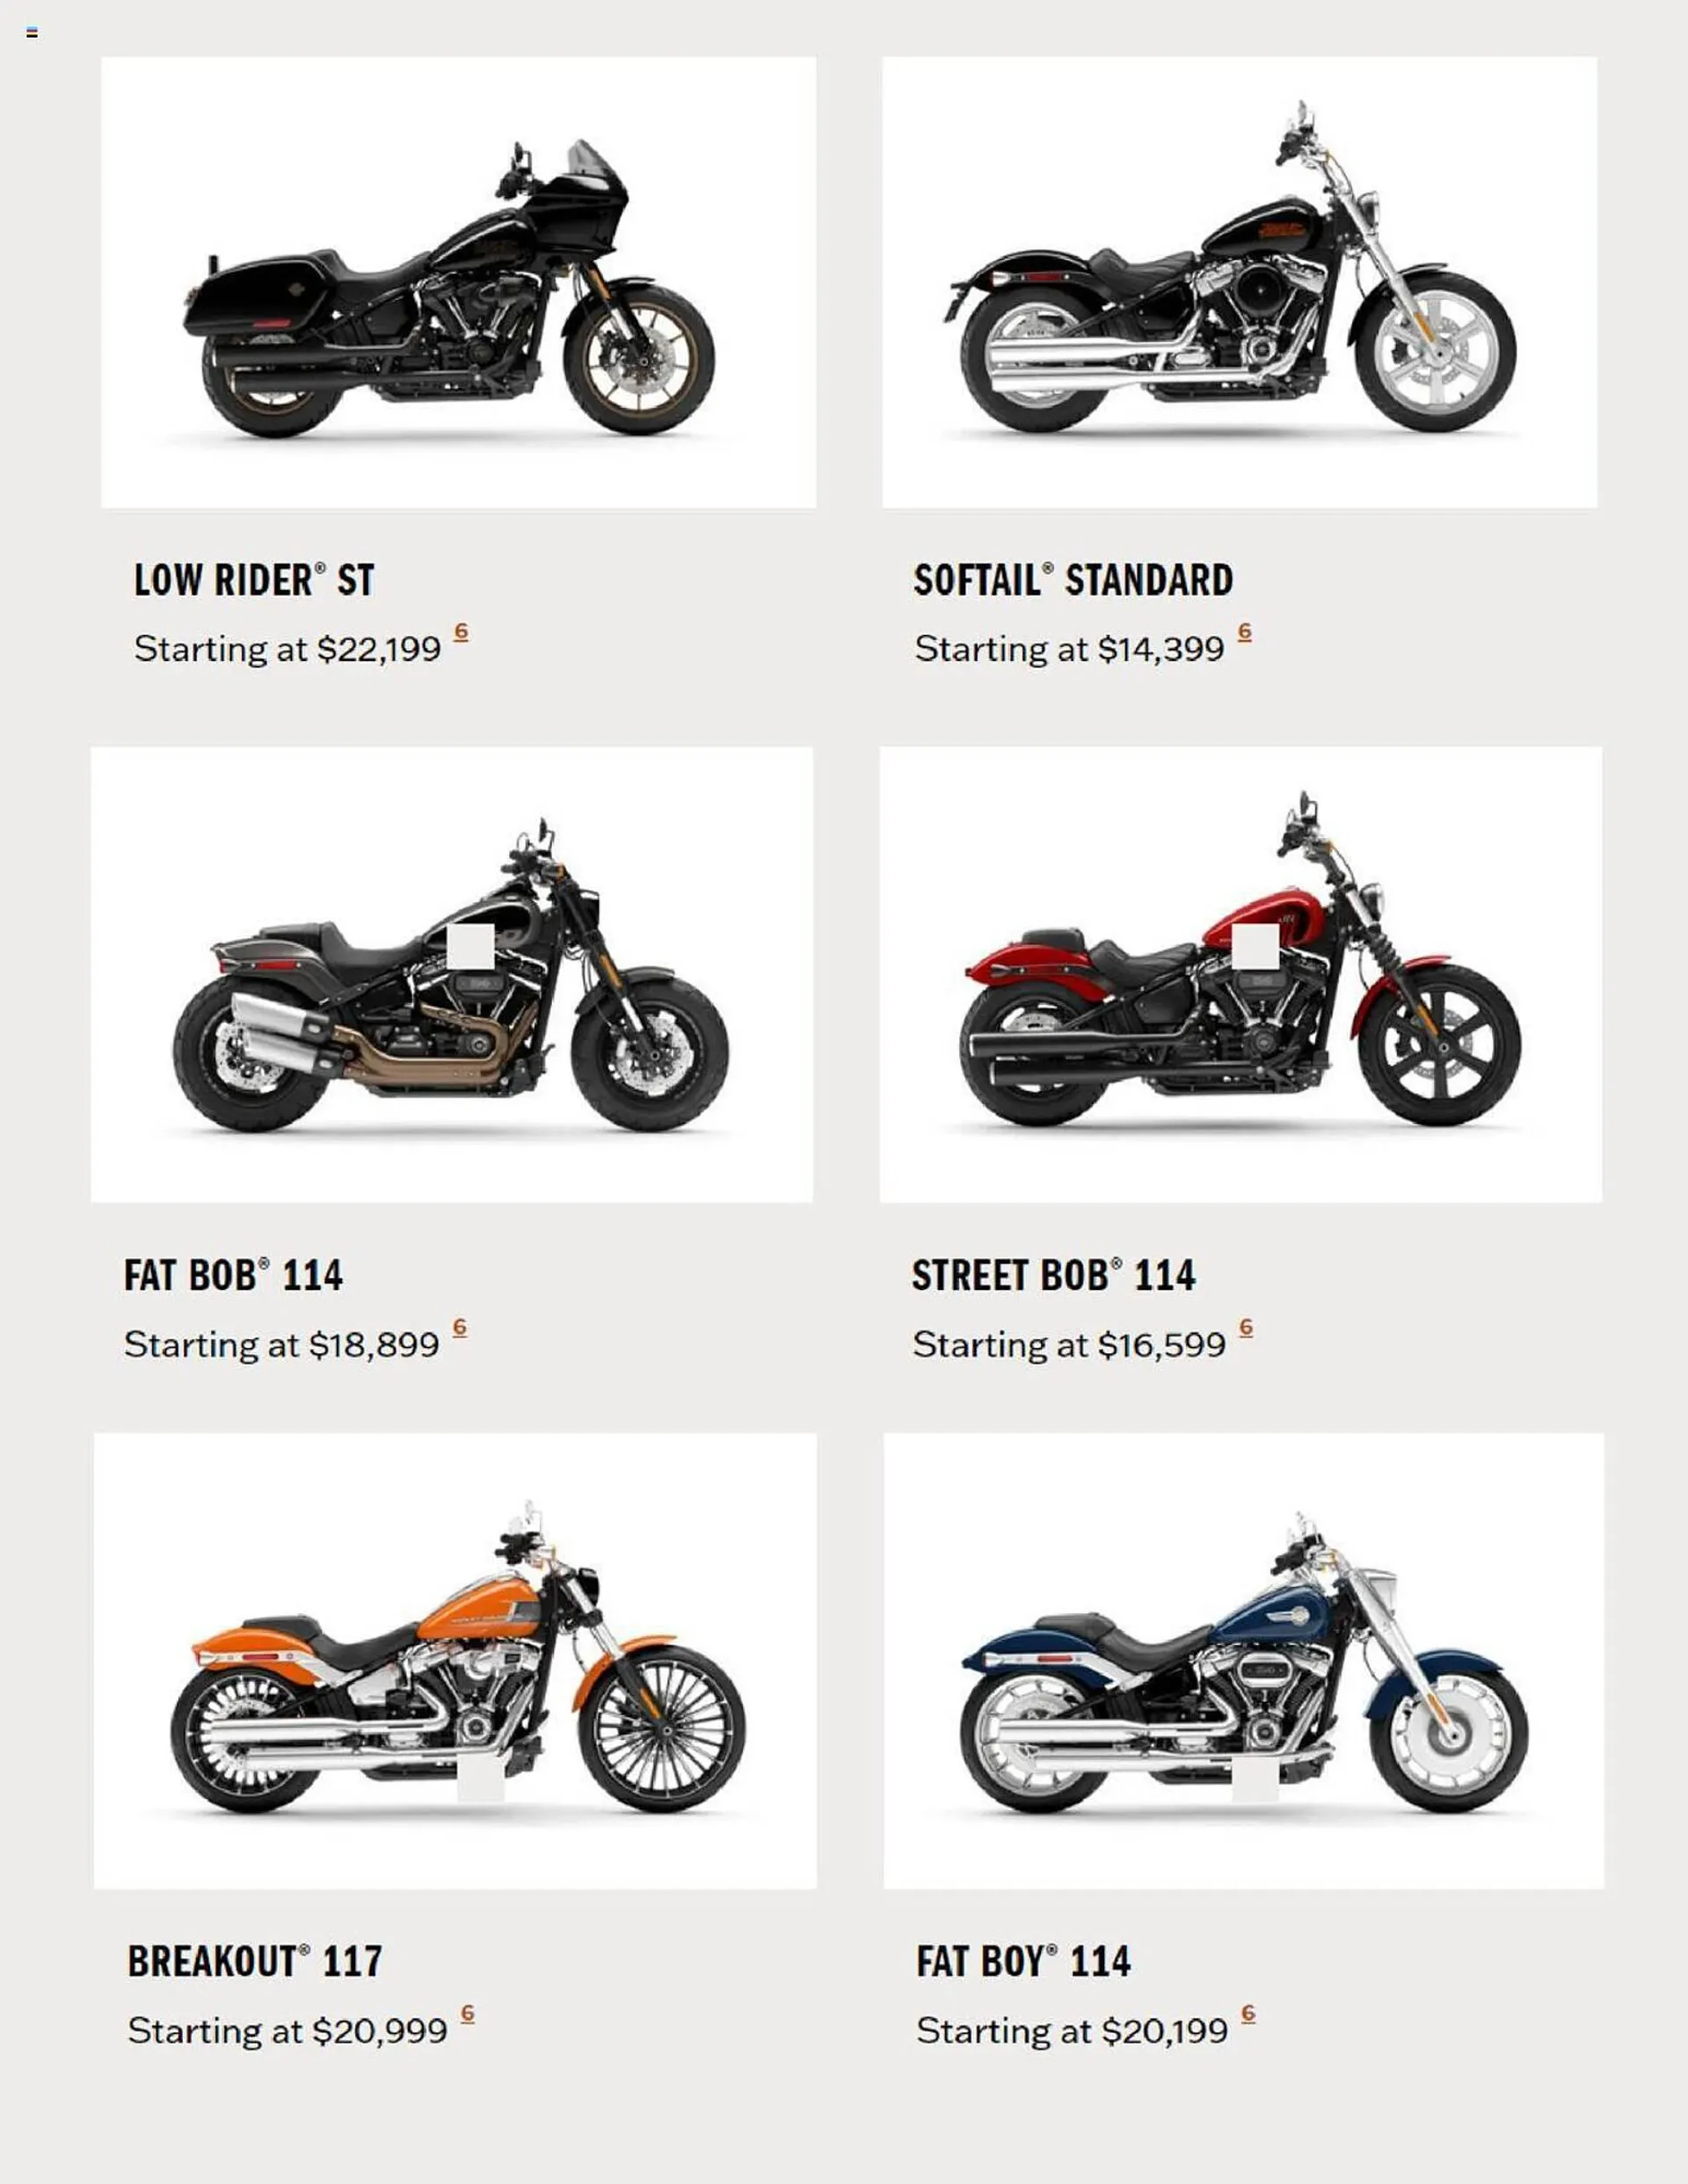 Harley Davidson ad - 2